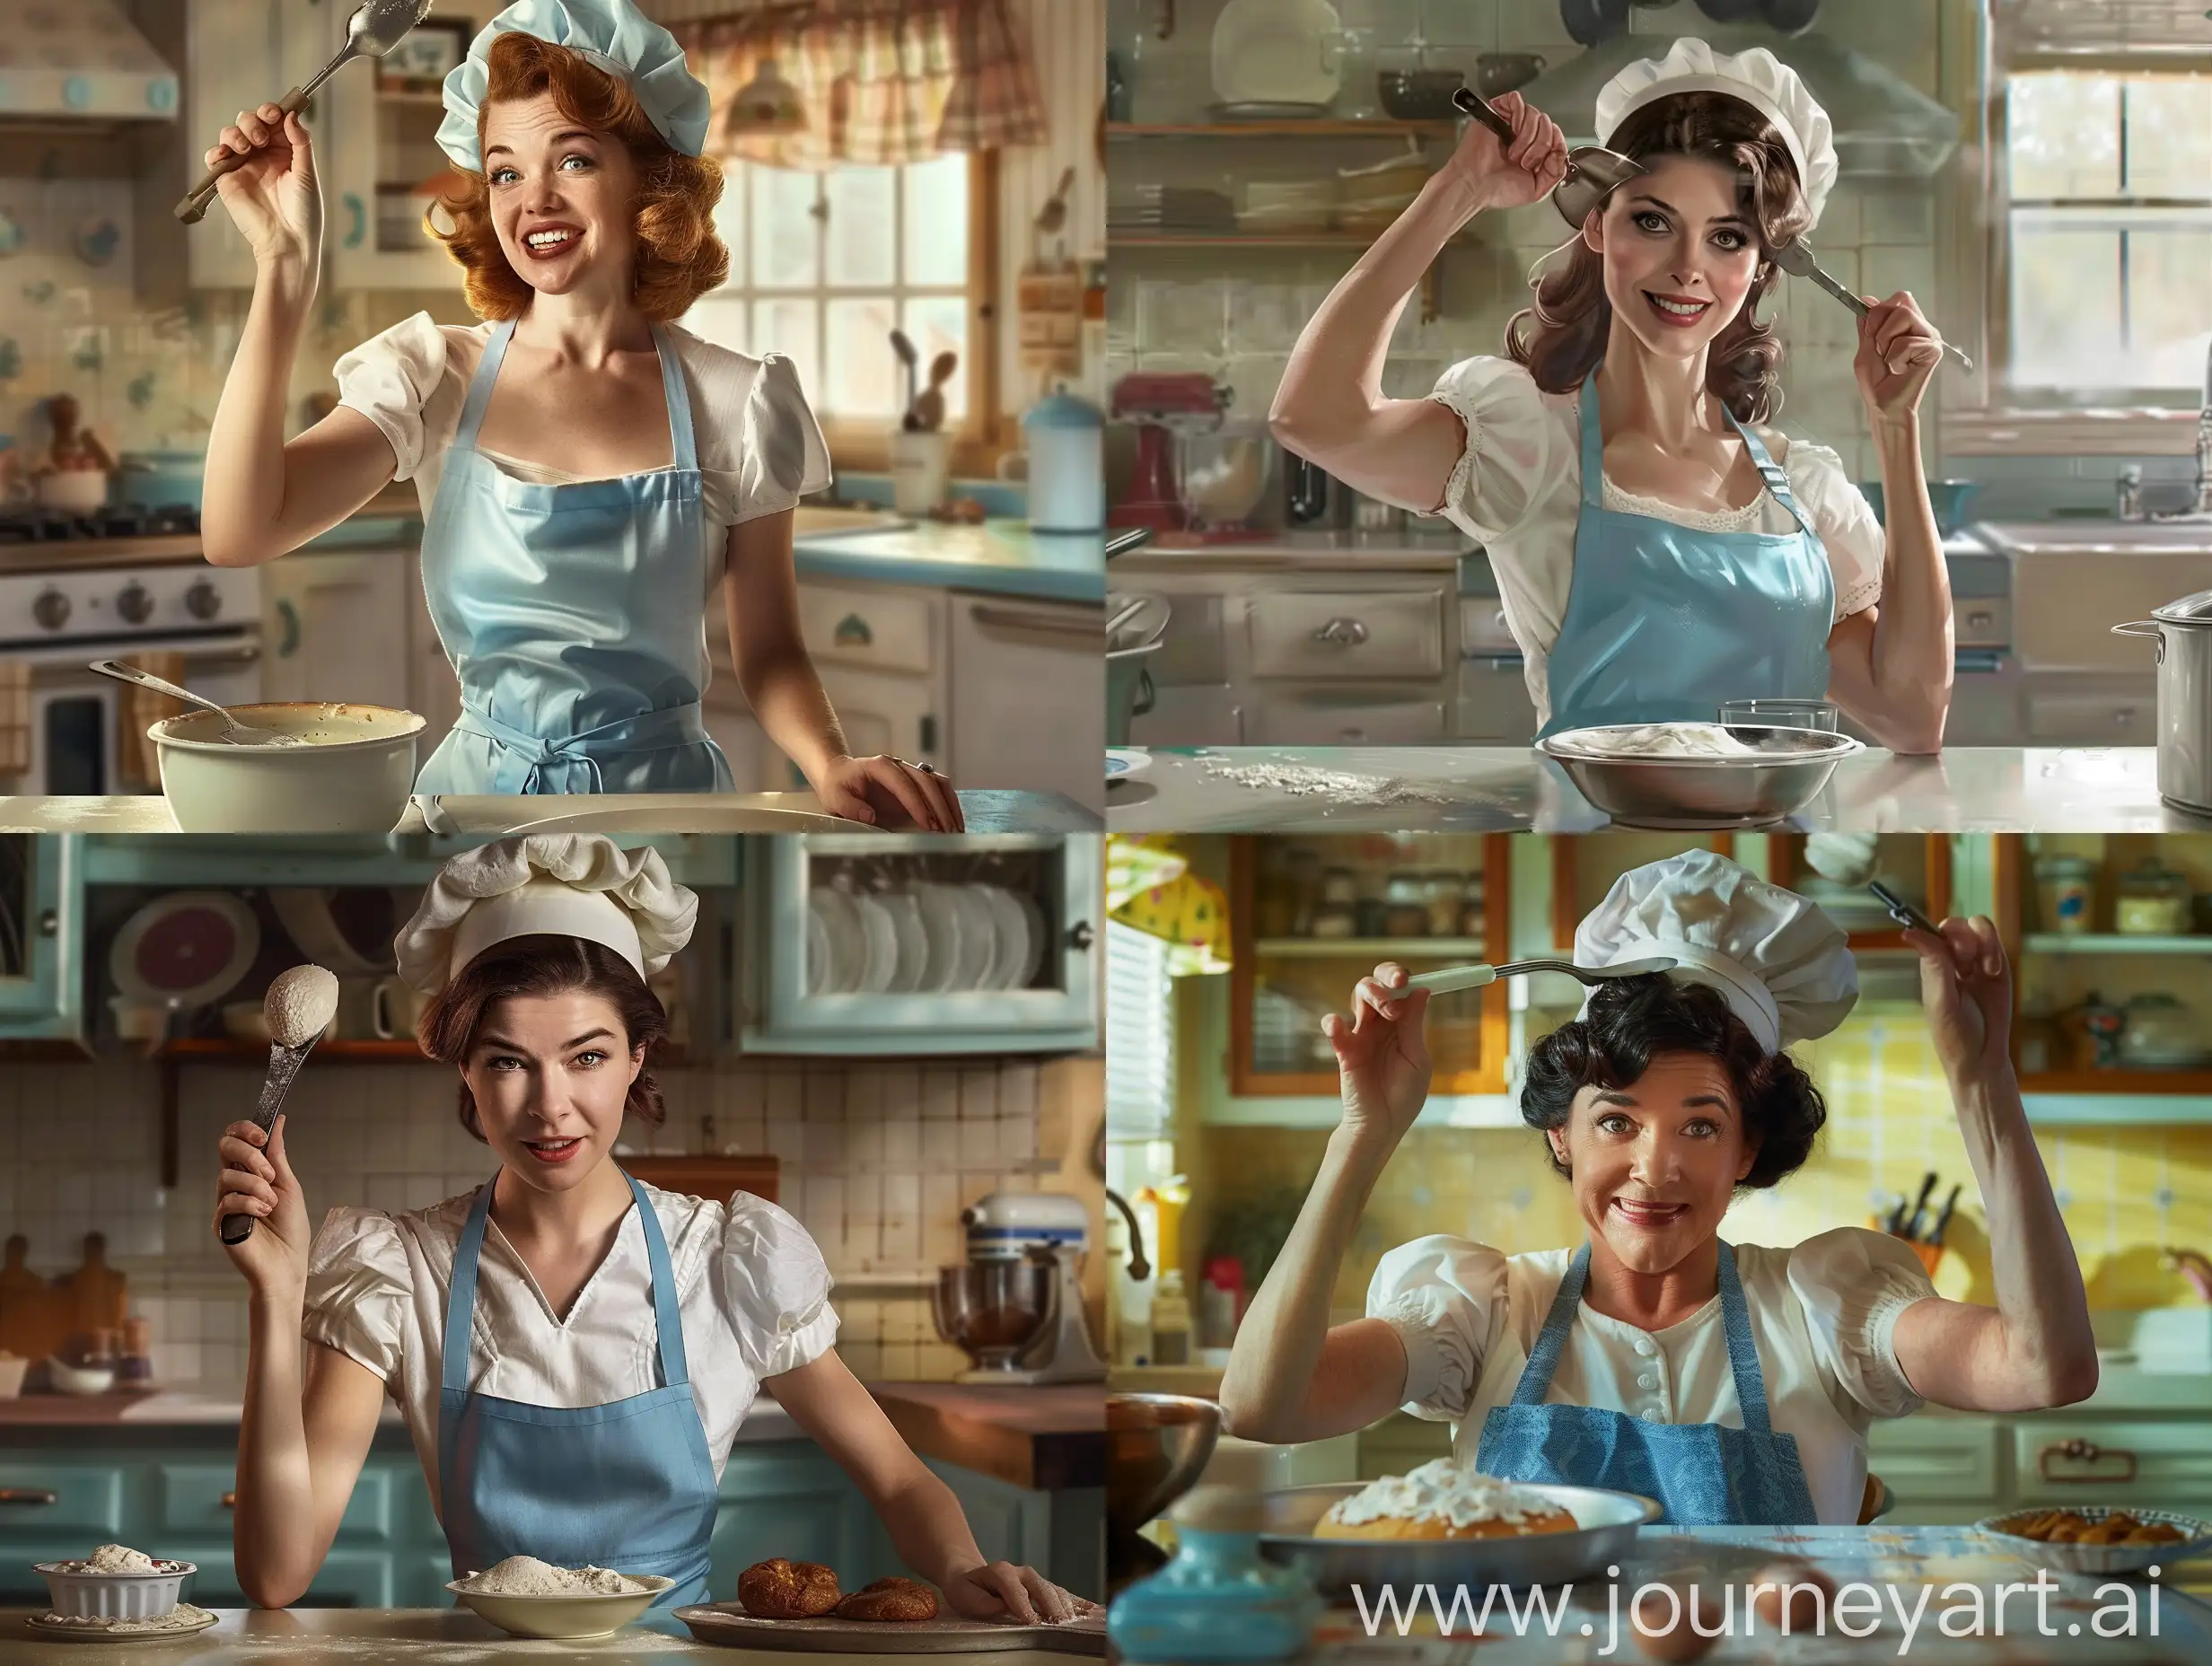 Anna-Gunn-as-Skyler-White-Cooking-with-Joy-in-Realistic-Kitchen-Scene